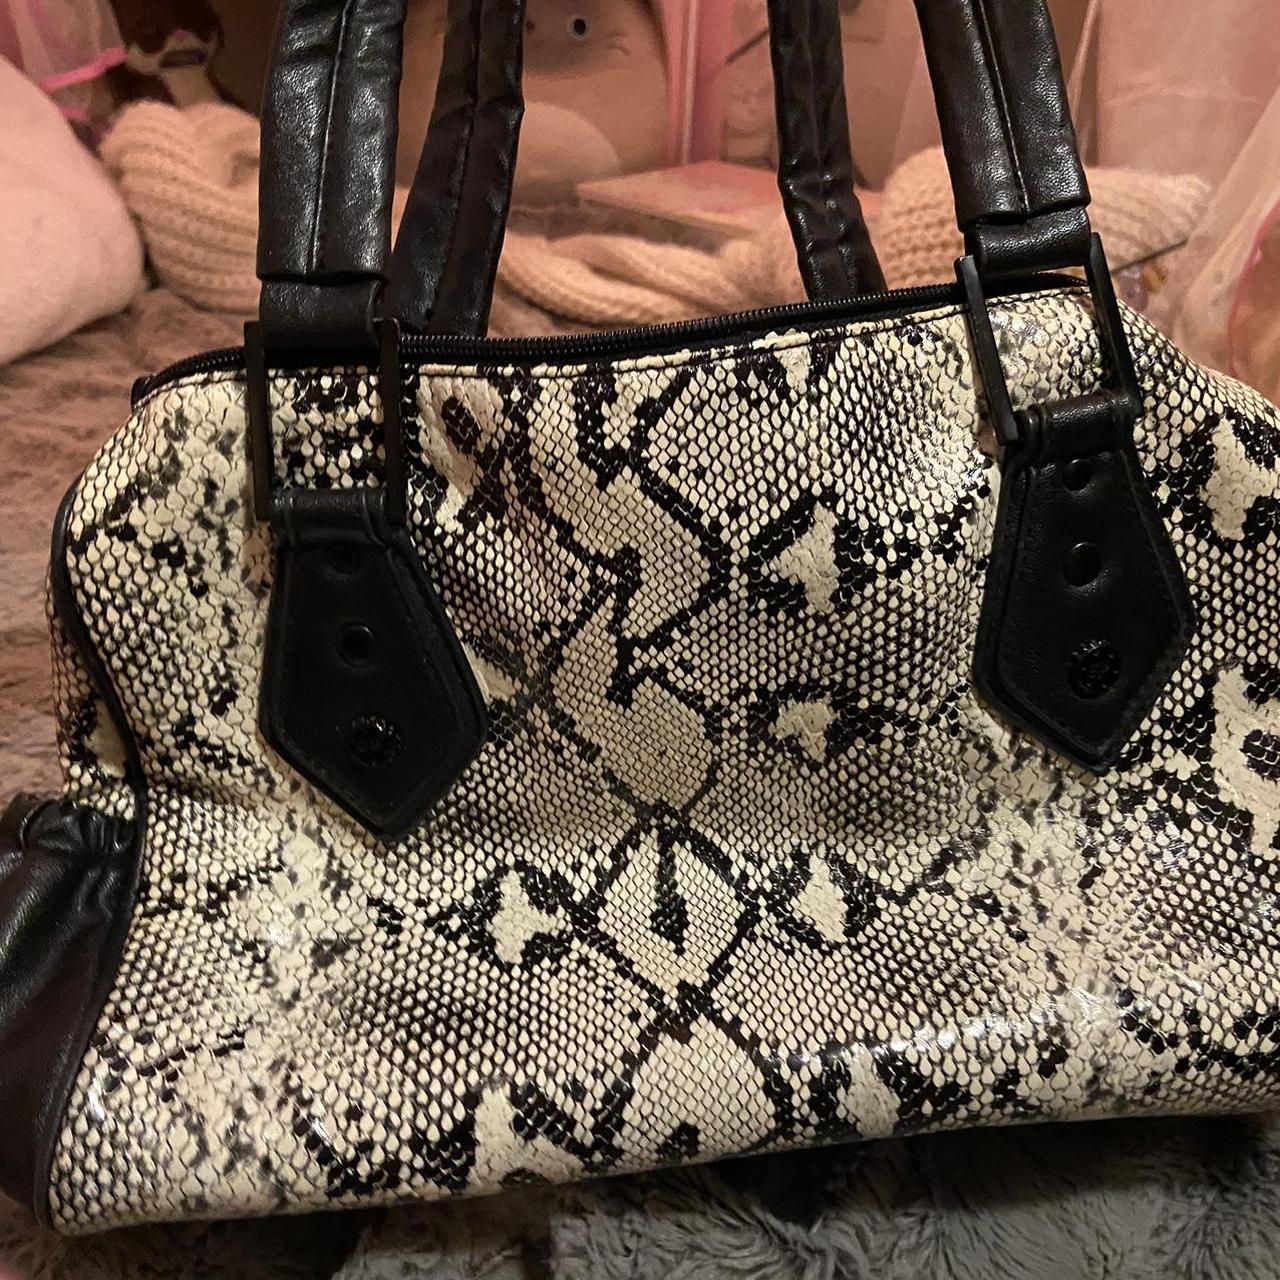 Fox racing handbag purse - Gem